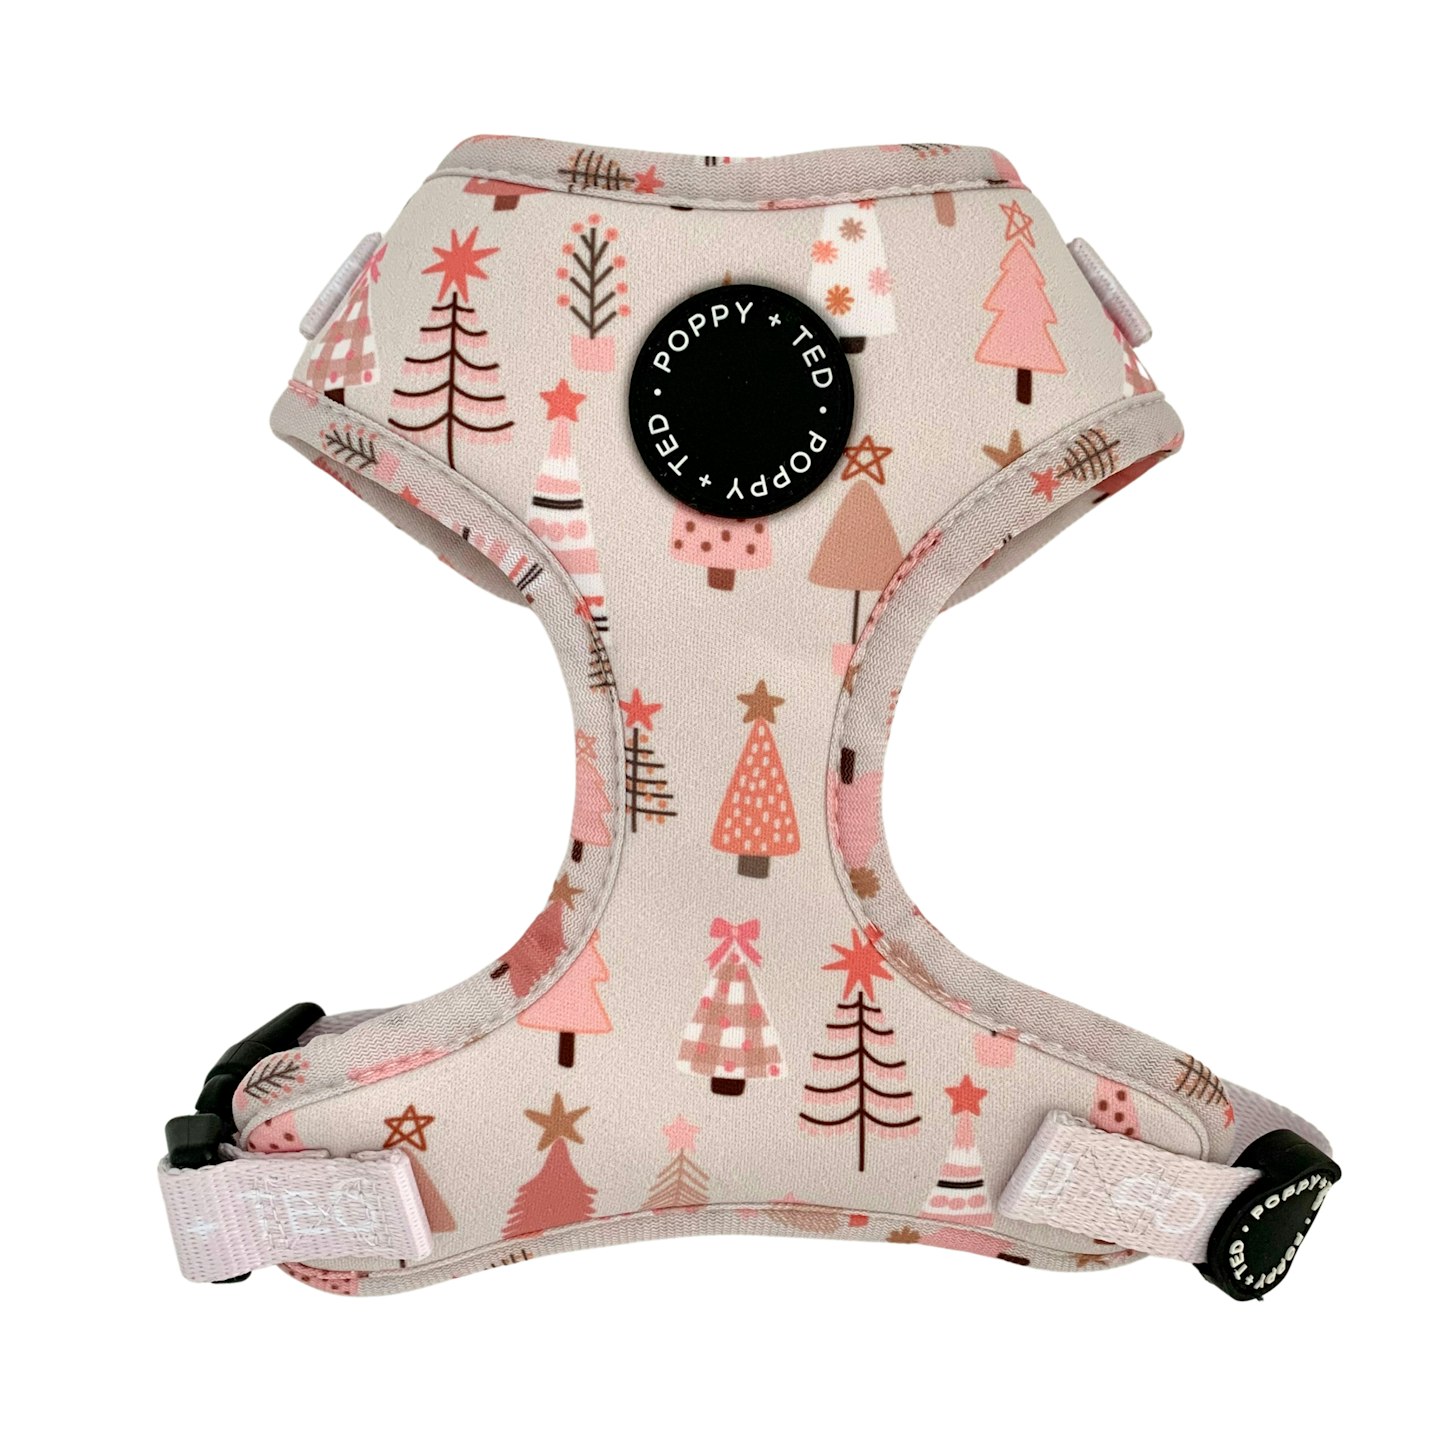 Poppy & Ted, Adjustable Harness Pink Wonderland, £24.99